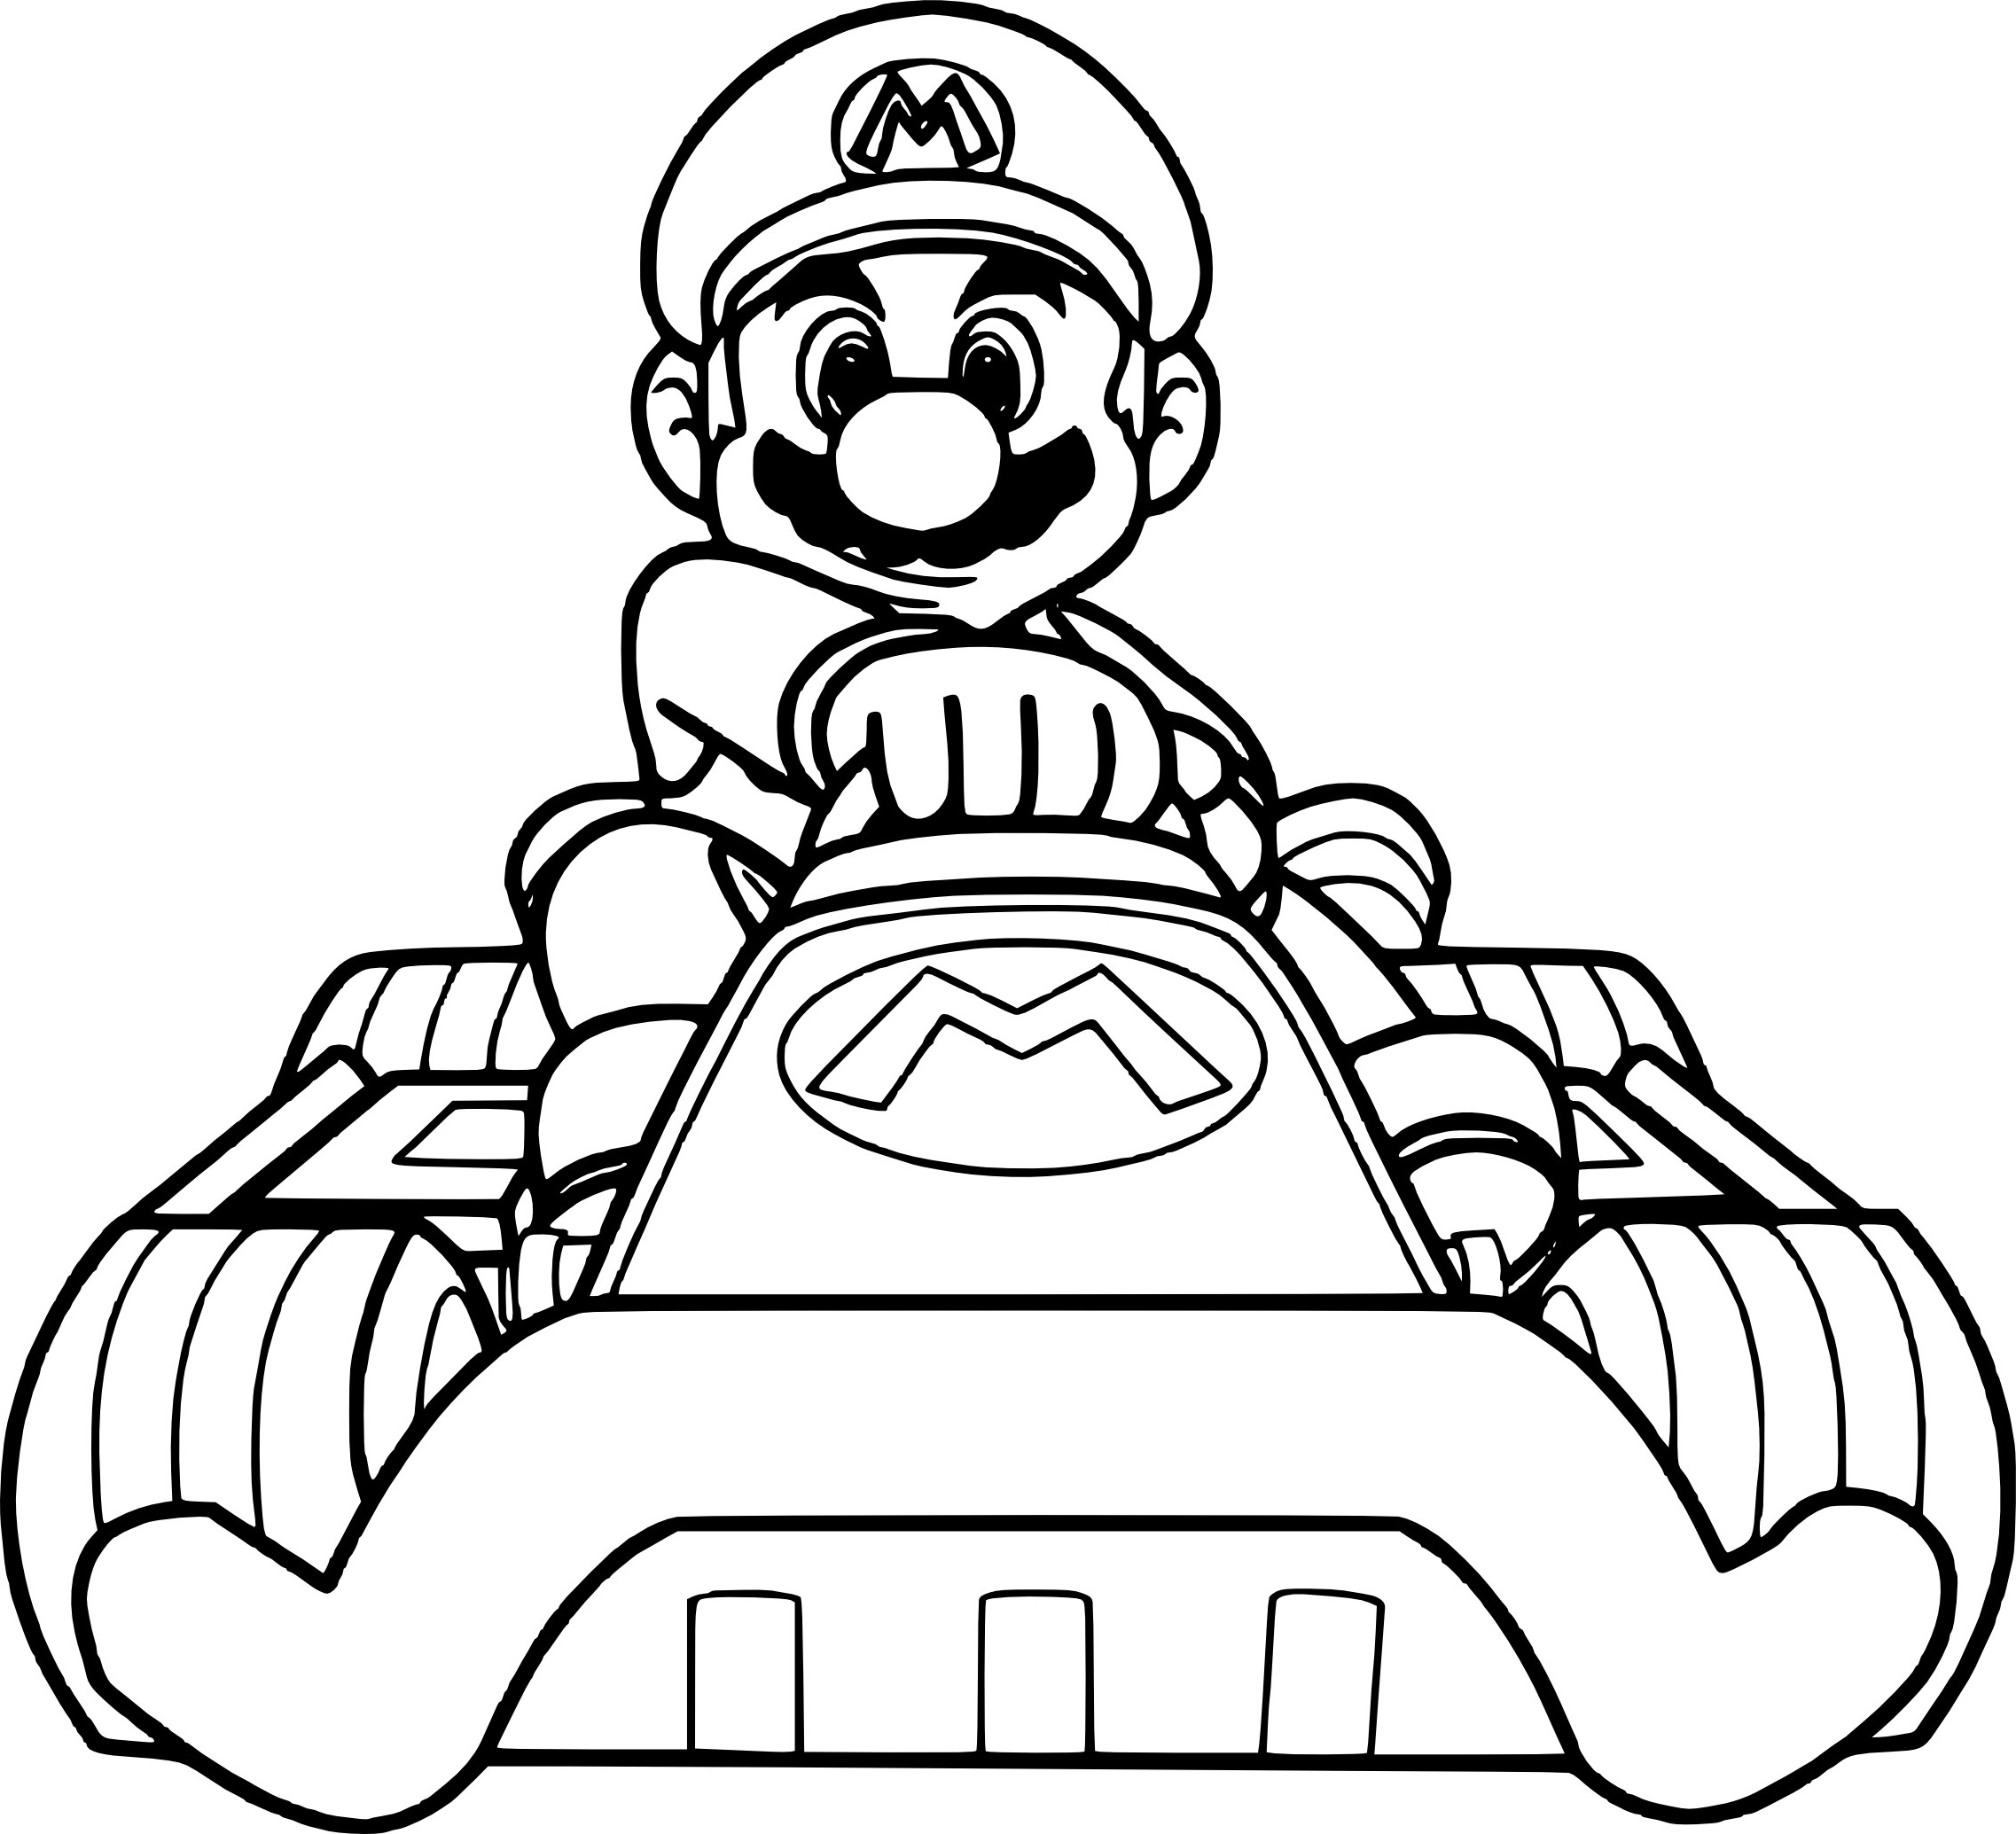 Mario Kart Coloriage Impressionnant Photos Coloriage De Mario Kart à Imprimer Sur Coloriage De